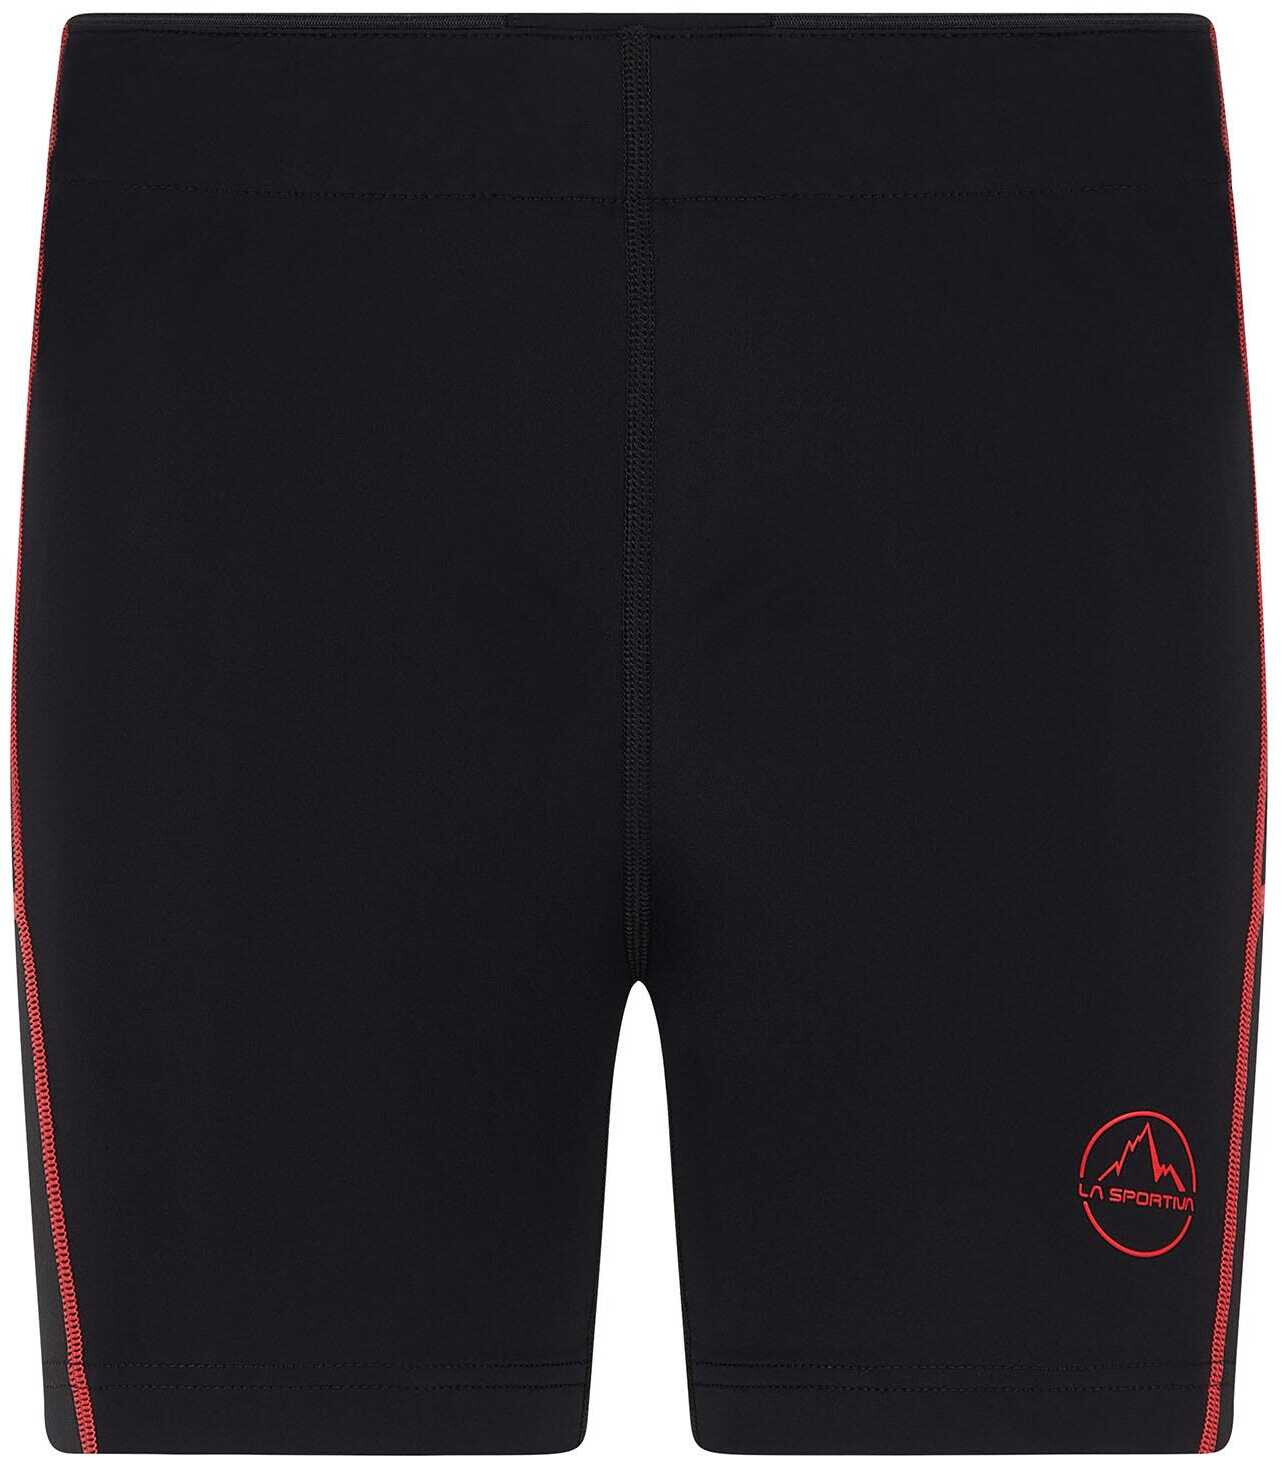 La Sportiva Triumph Tight Shorts Damen schwarz/pink